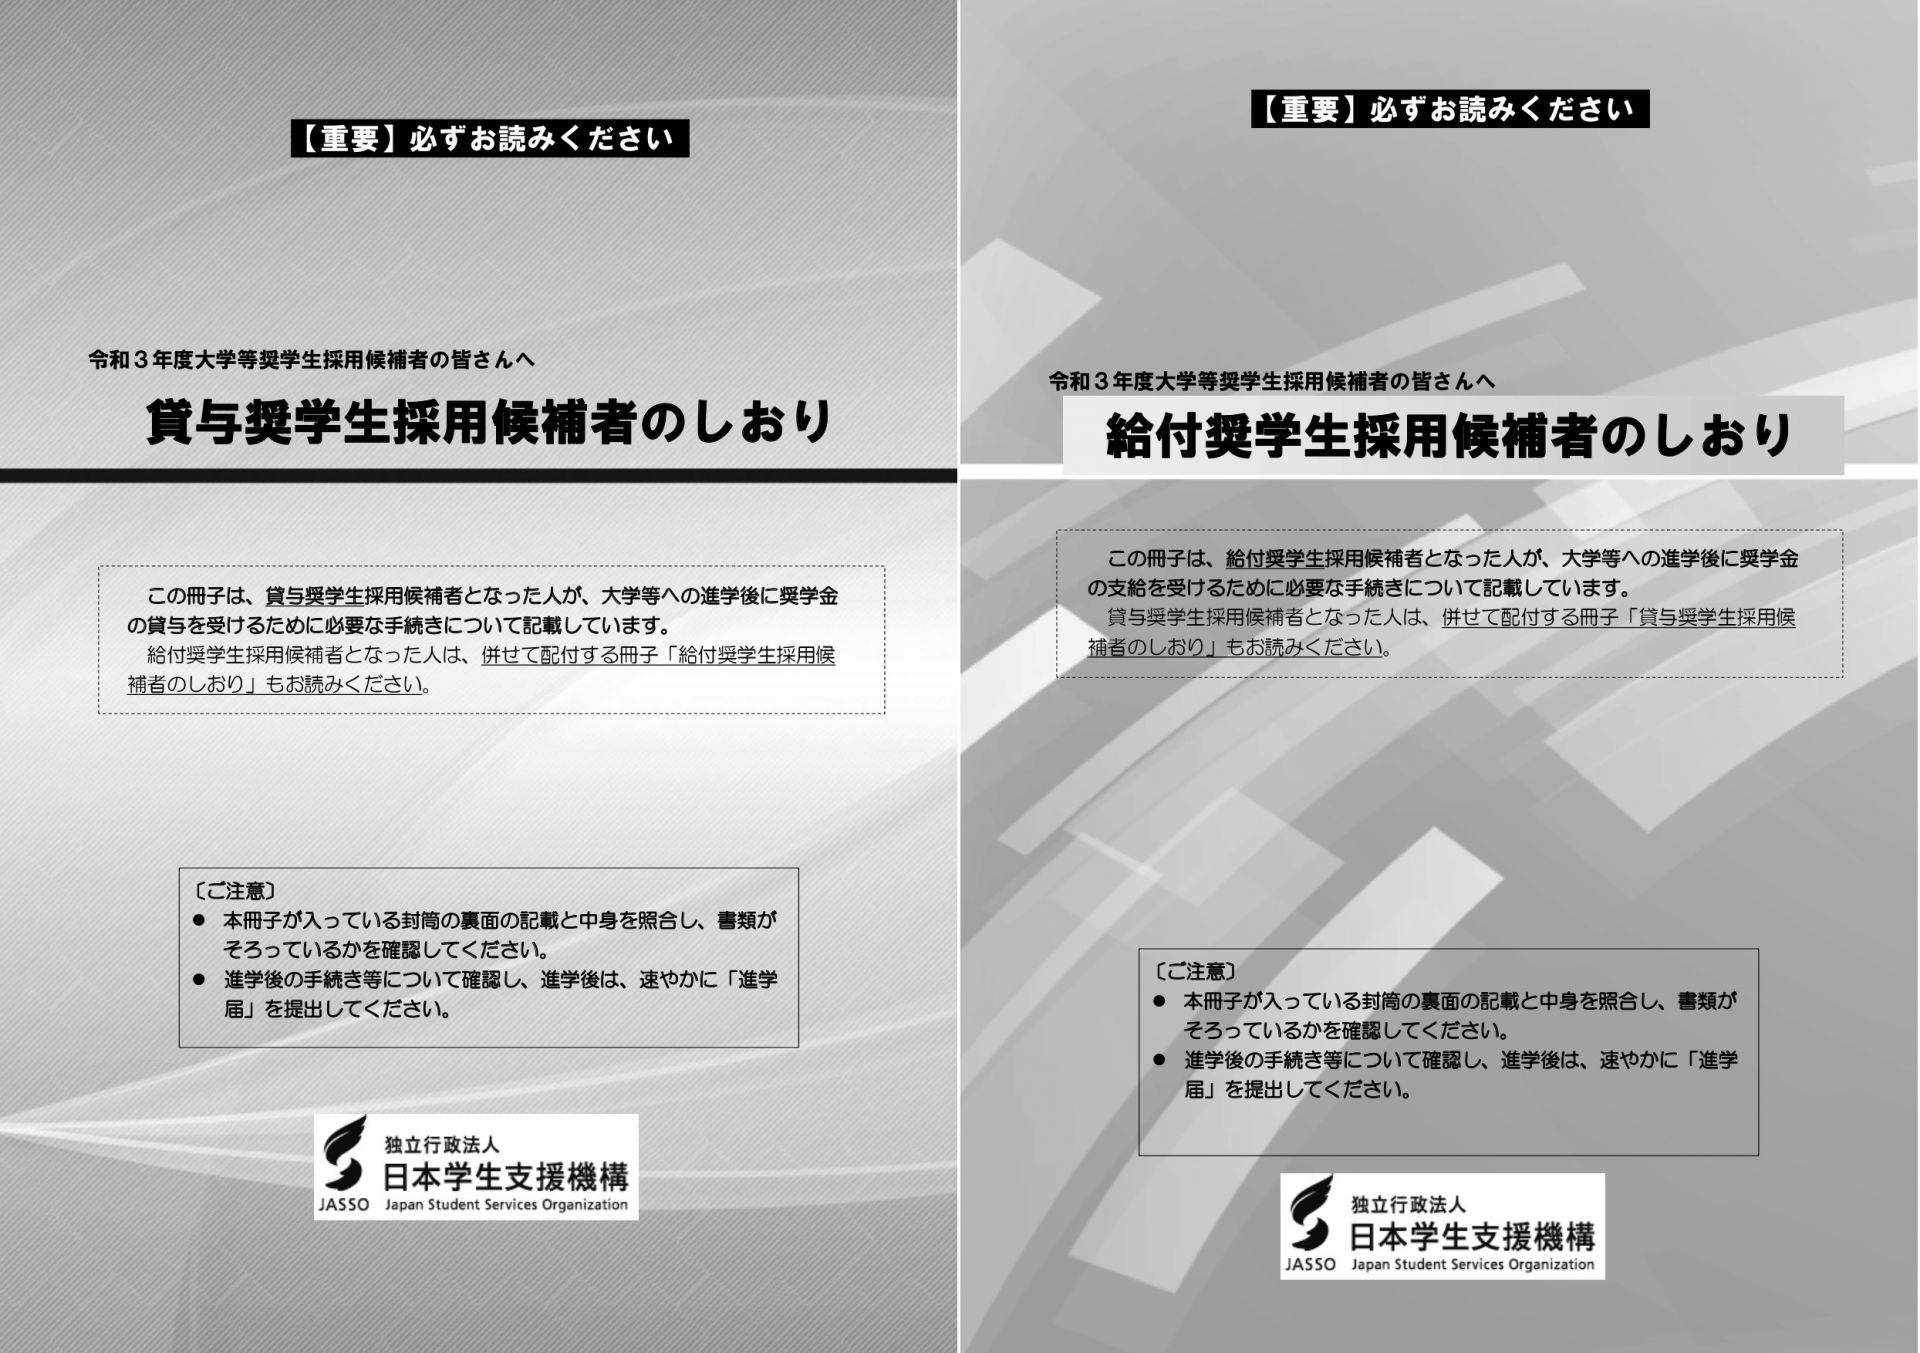 Jasso奨学金10 予約採用審査結果を解説 Jam 日本アニメ マンガ専門学校